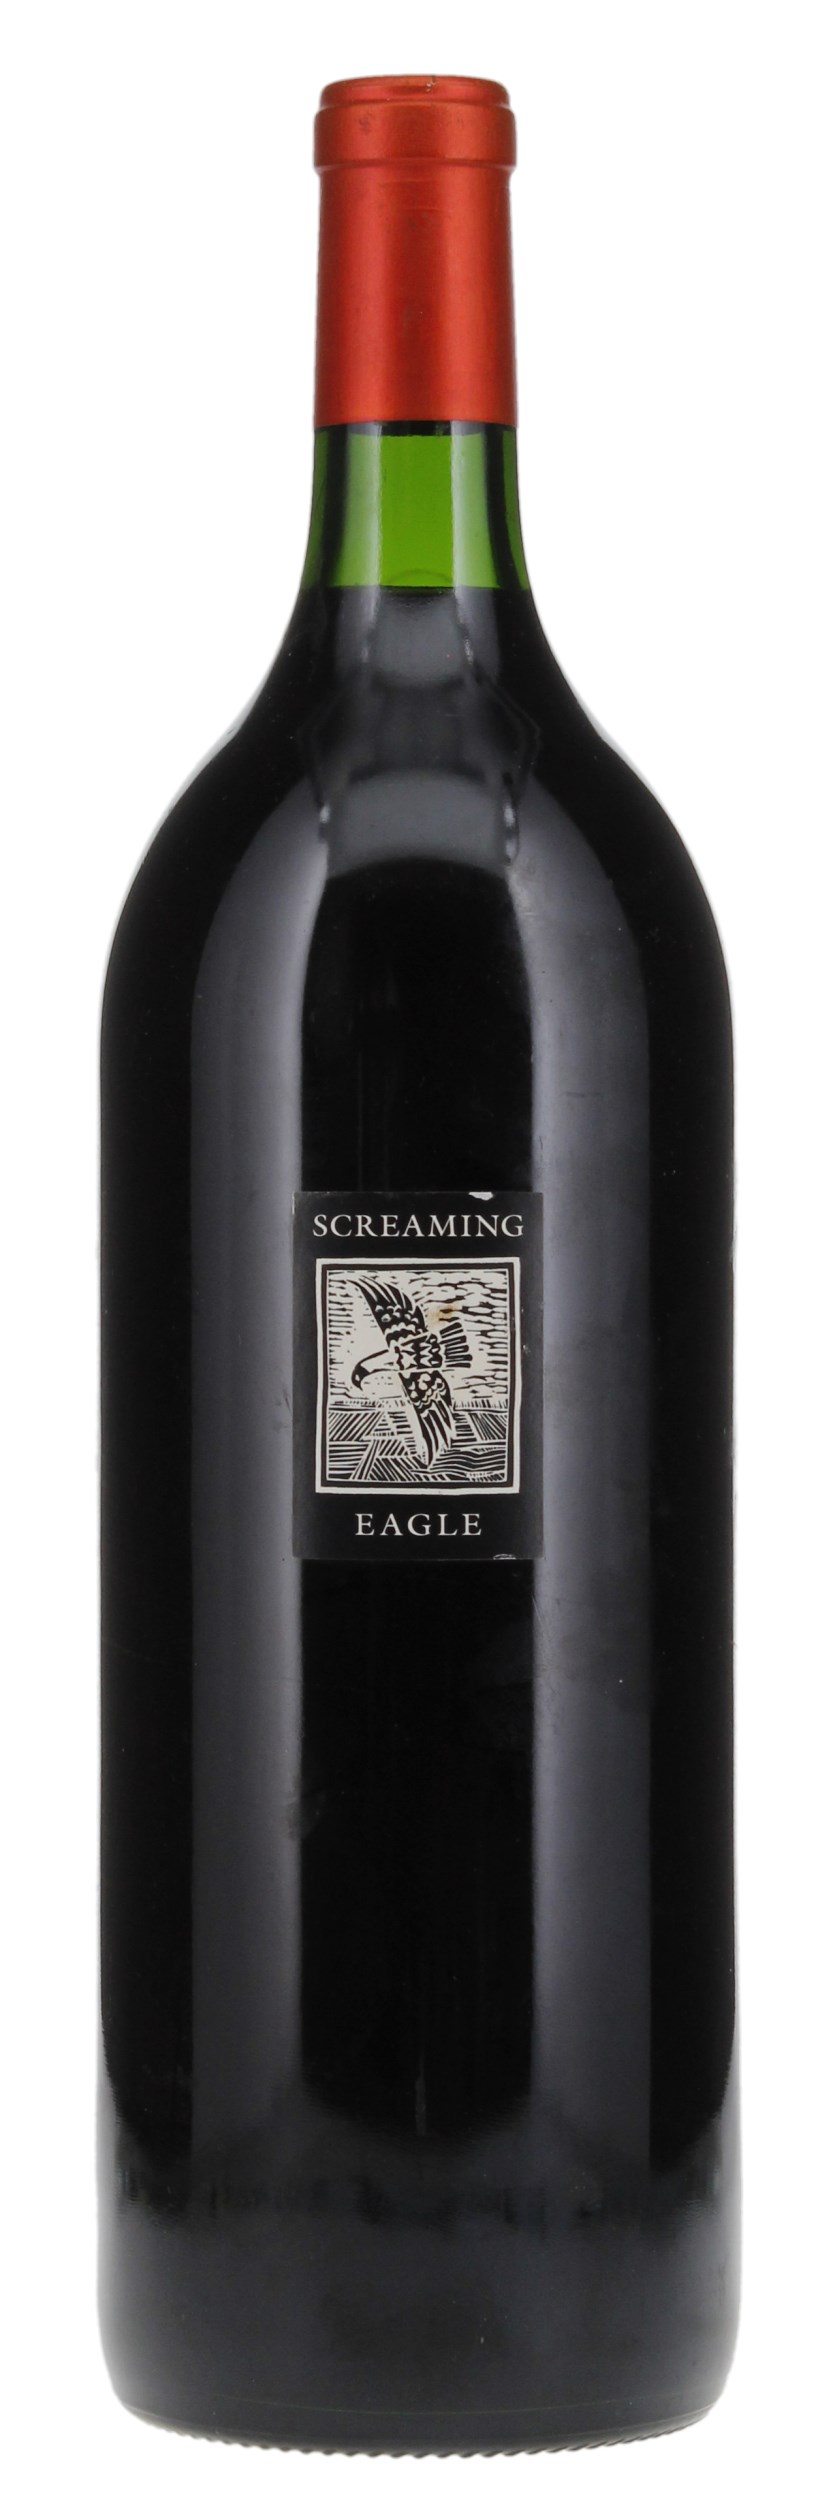 1992 Screaming Eagle Cabernet Sauvignon, 1.5ltr